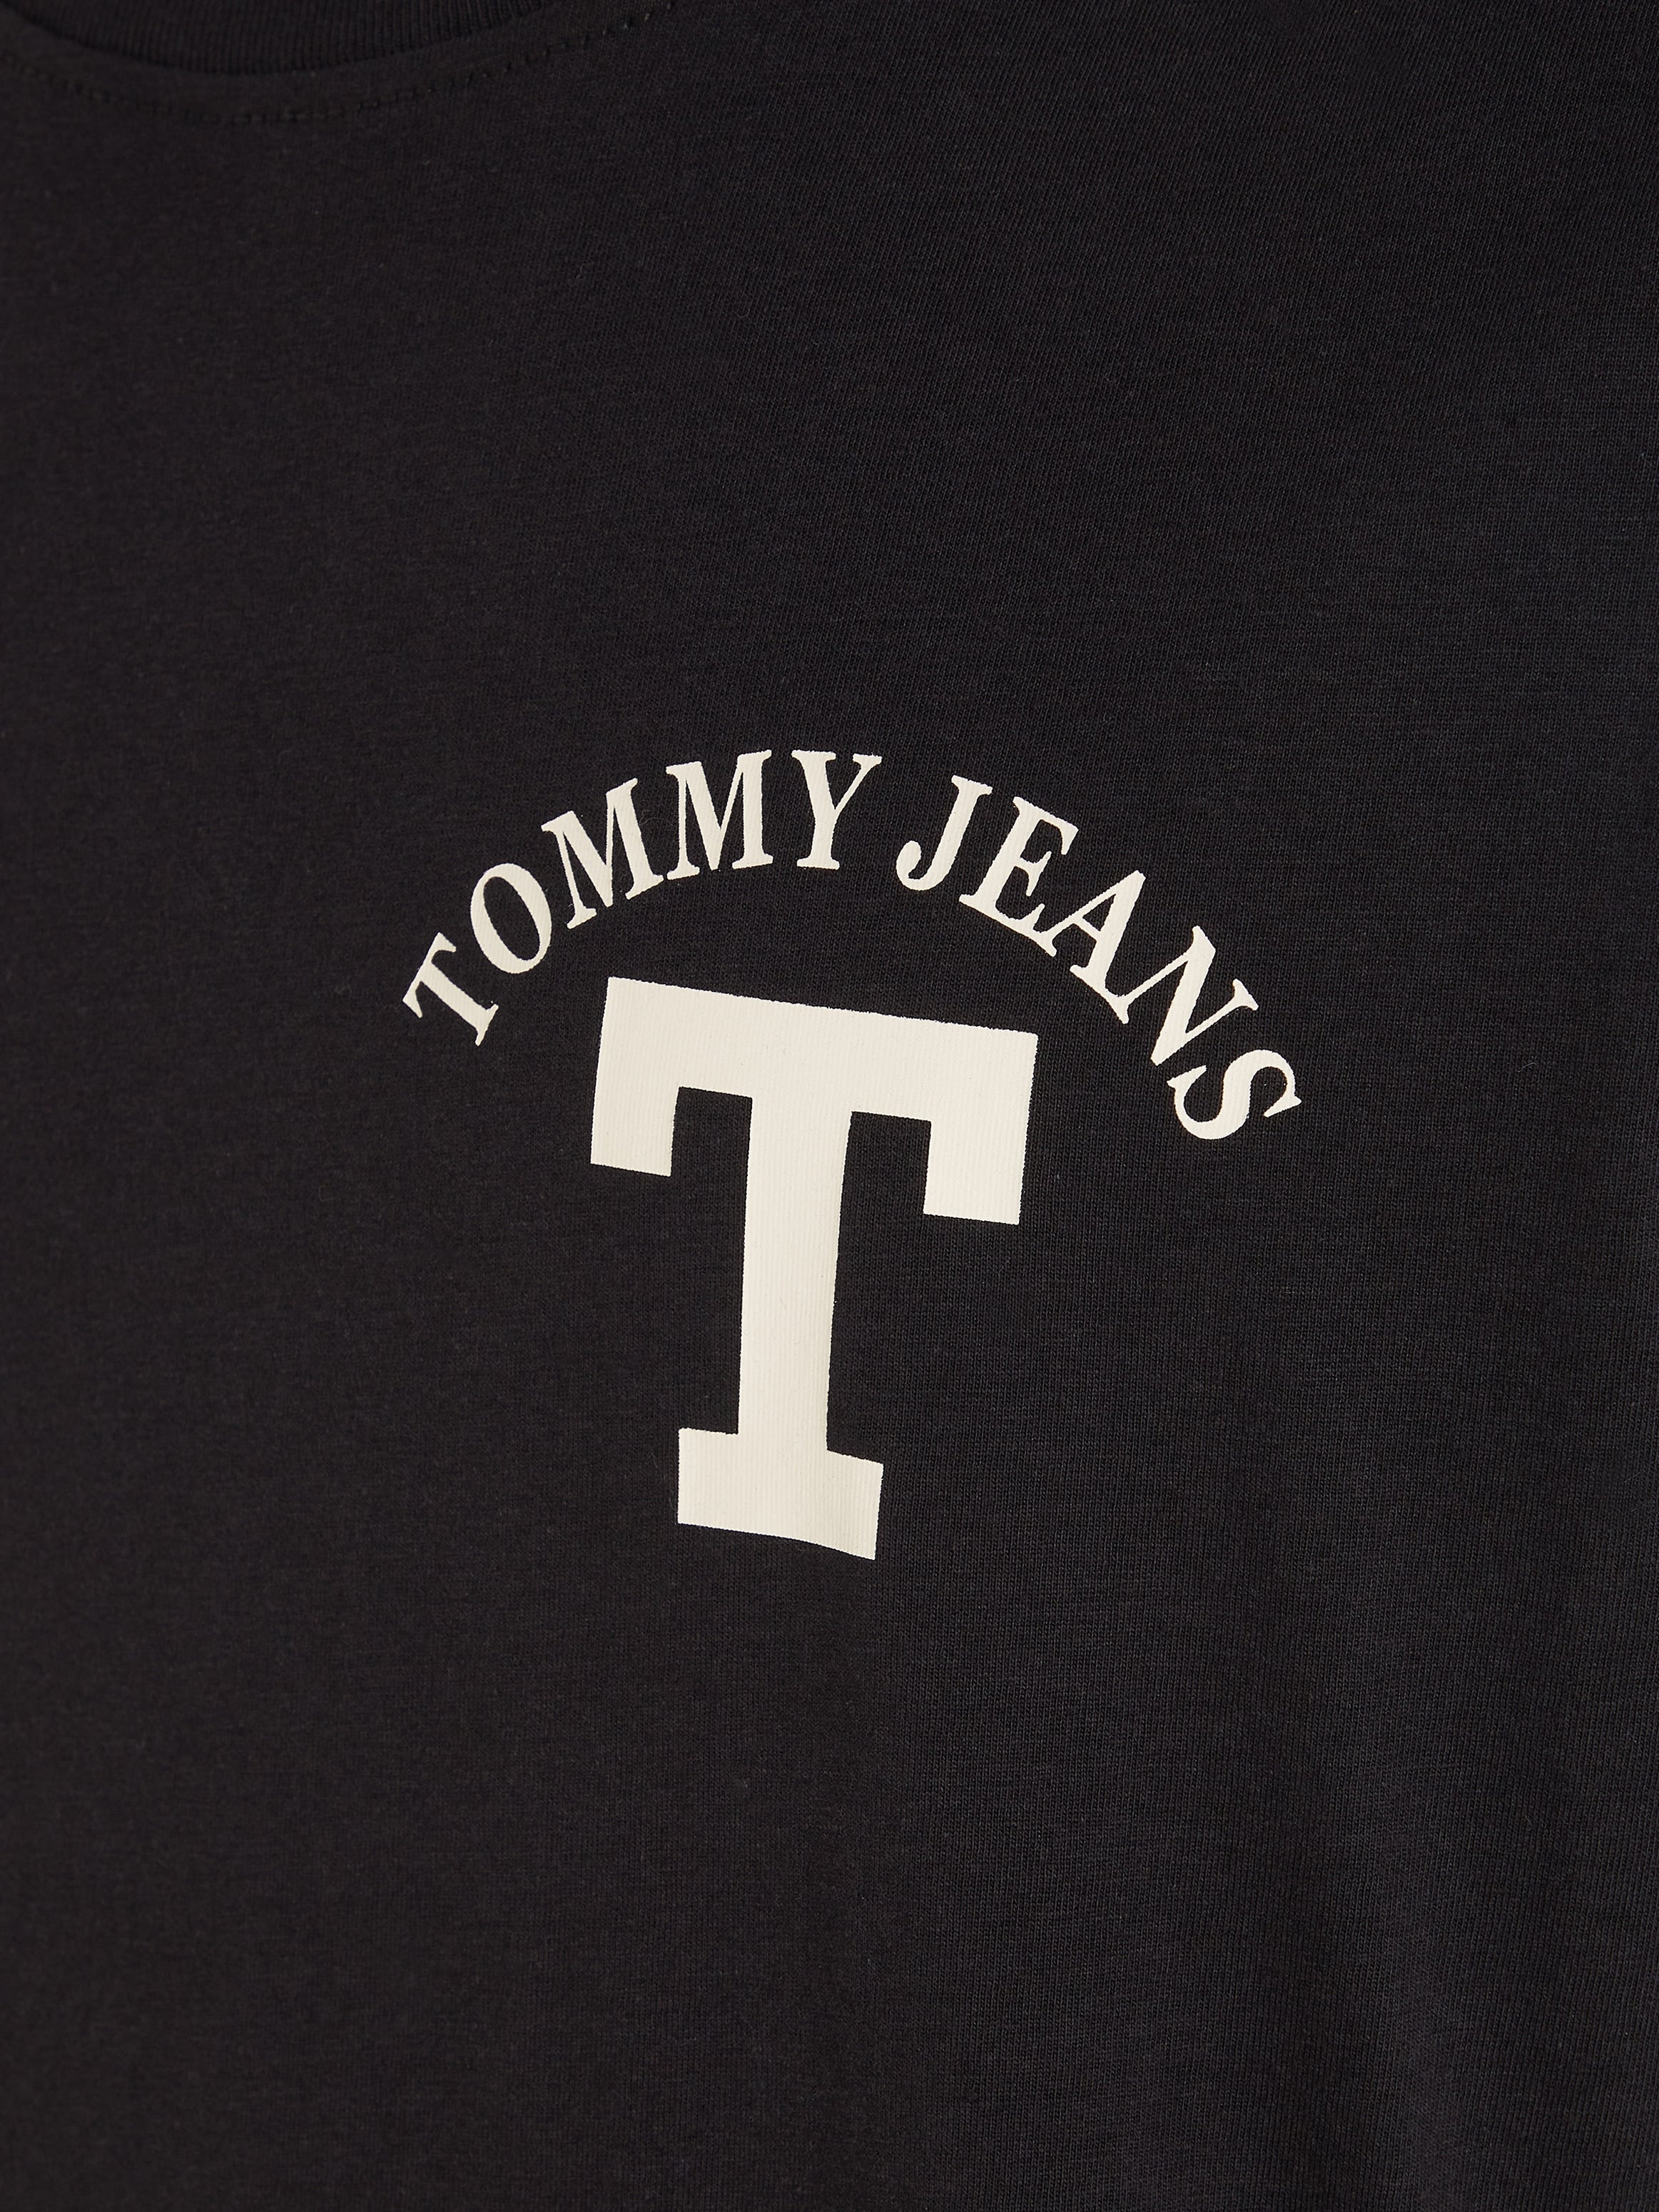 T-Shirt Letterman Galvin - Men Black Jeans Tommy - Curved for